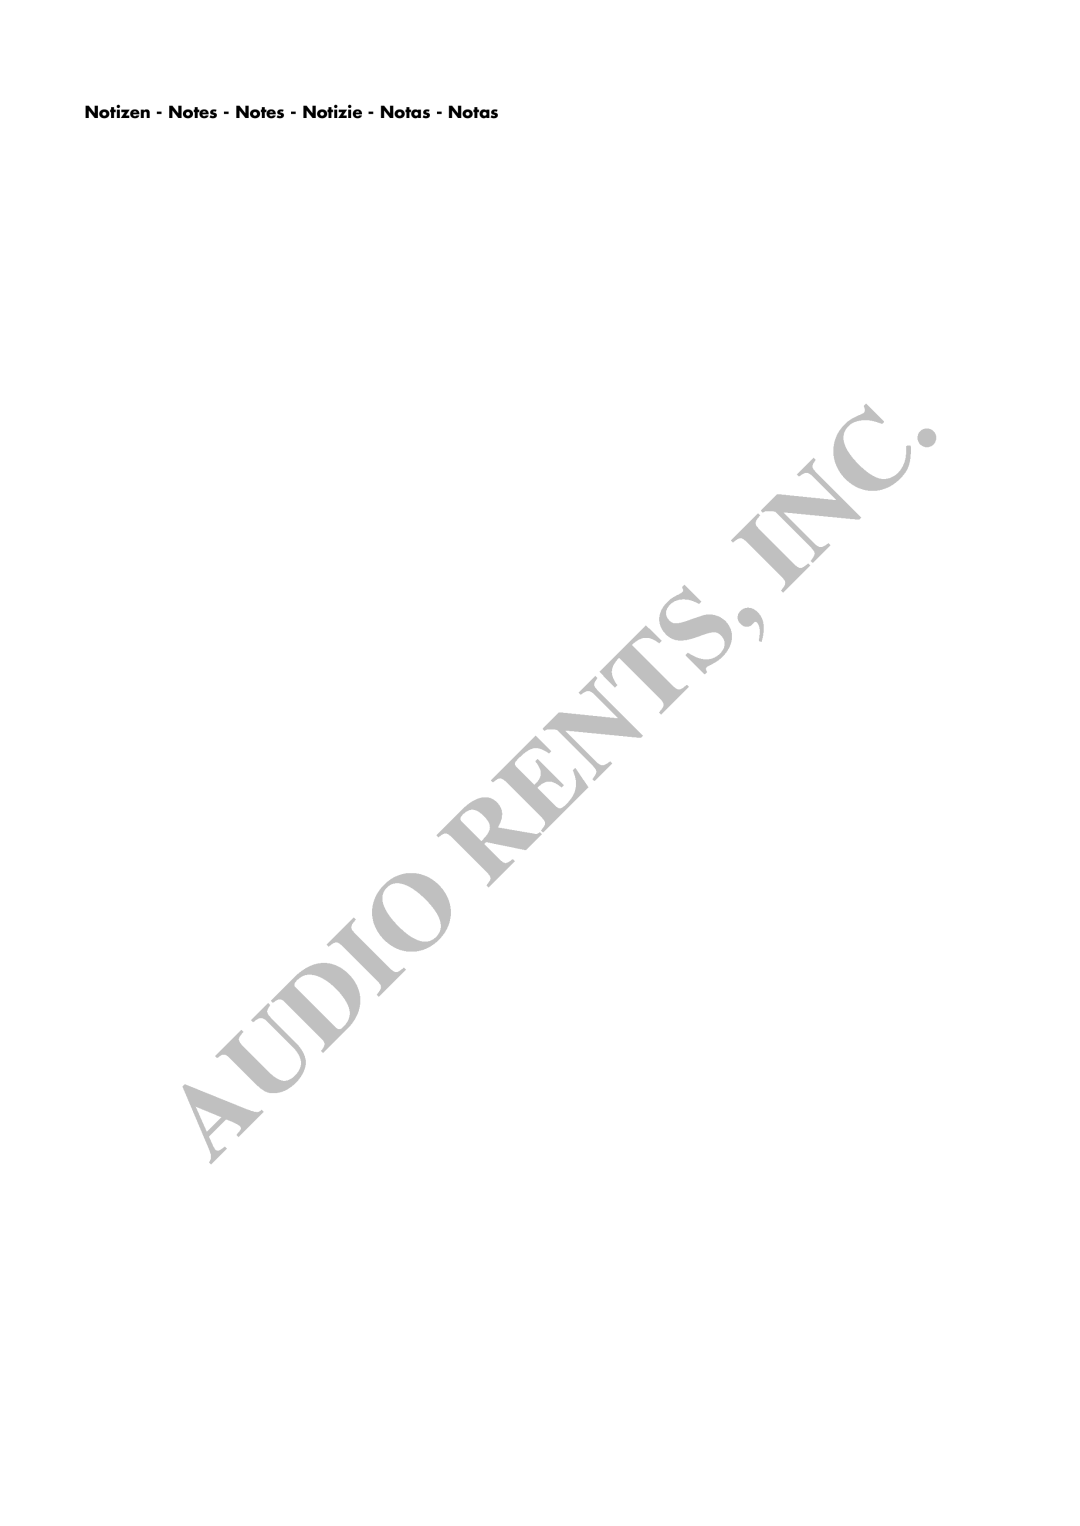 AKG Acoustics C 12VR manual Notizen - Notes - Notes - Notizie - Notas - Notas 